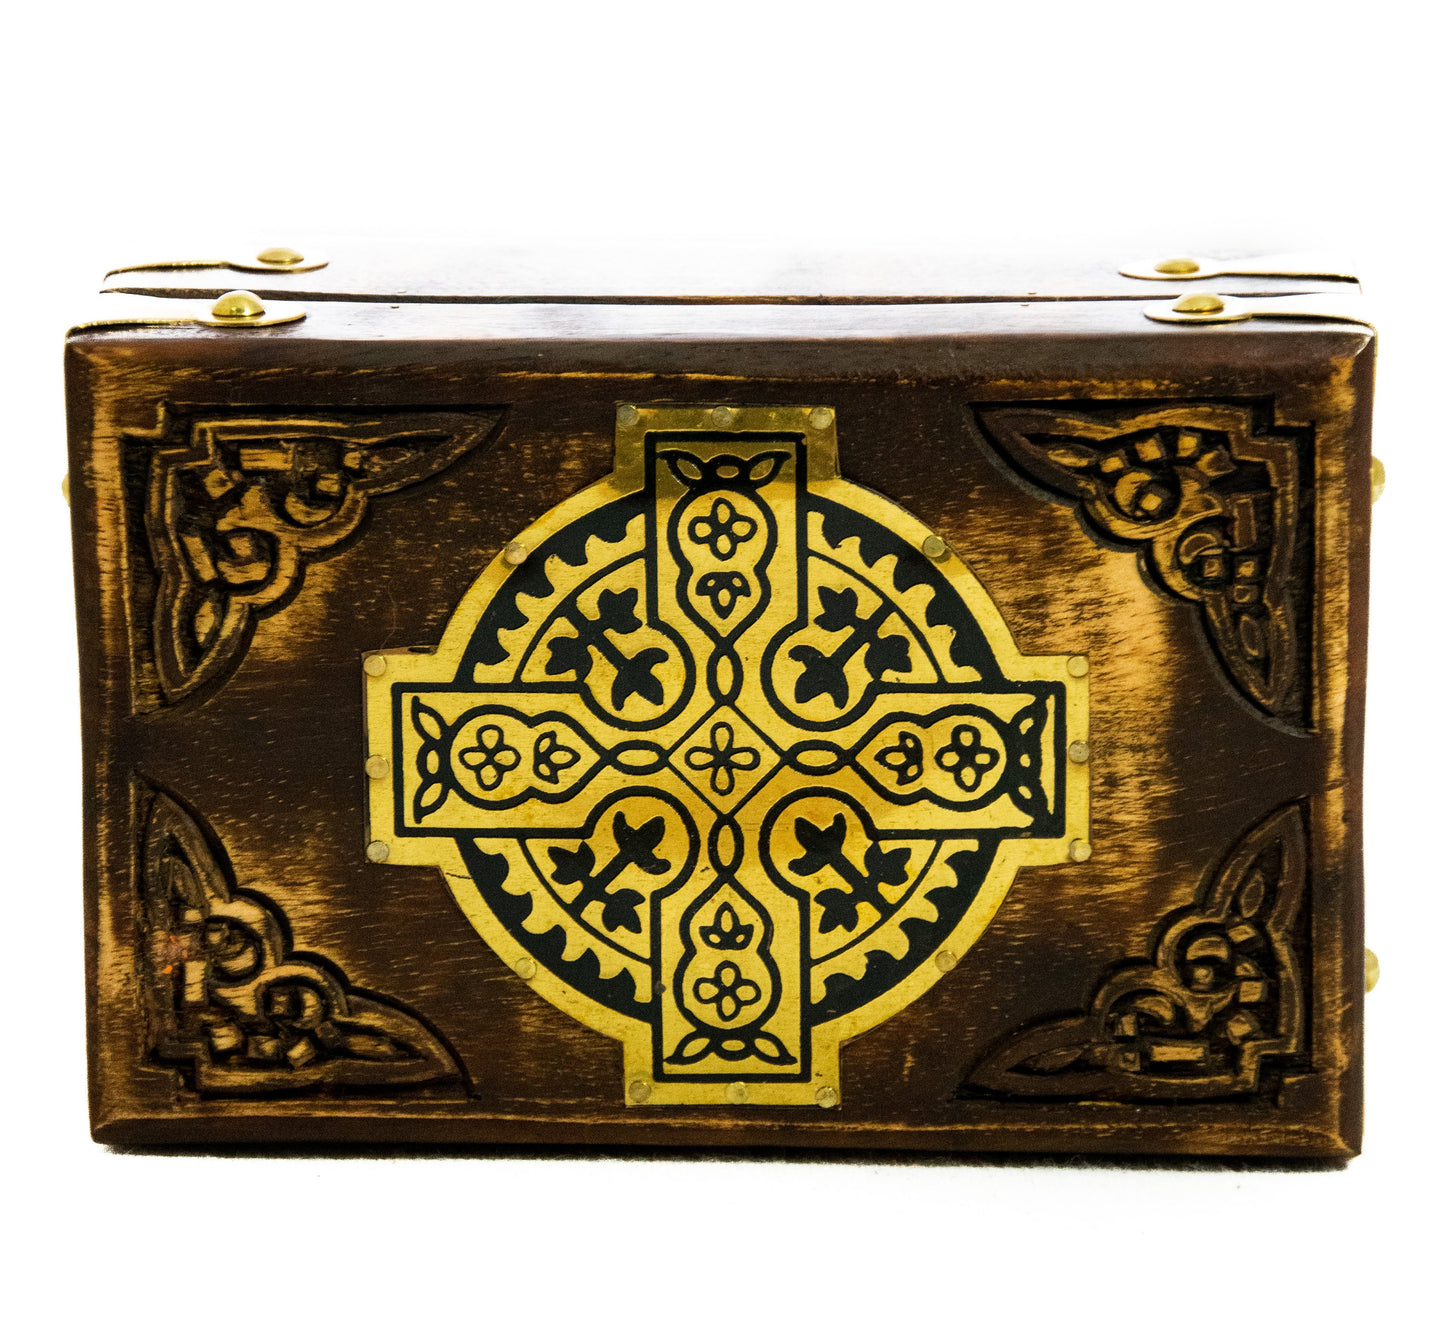 Handmade Religious carved wooden Prayer box with Christian Cross, Greek Vintage Decorative Jewelry Keepsake box 15x10x6cm vintage gift TheHolyArt